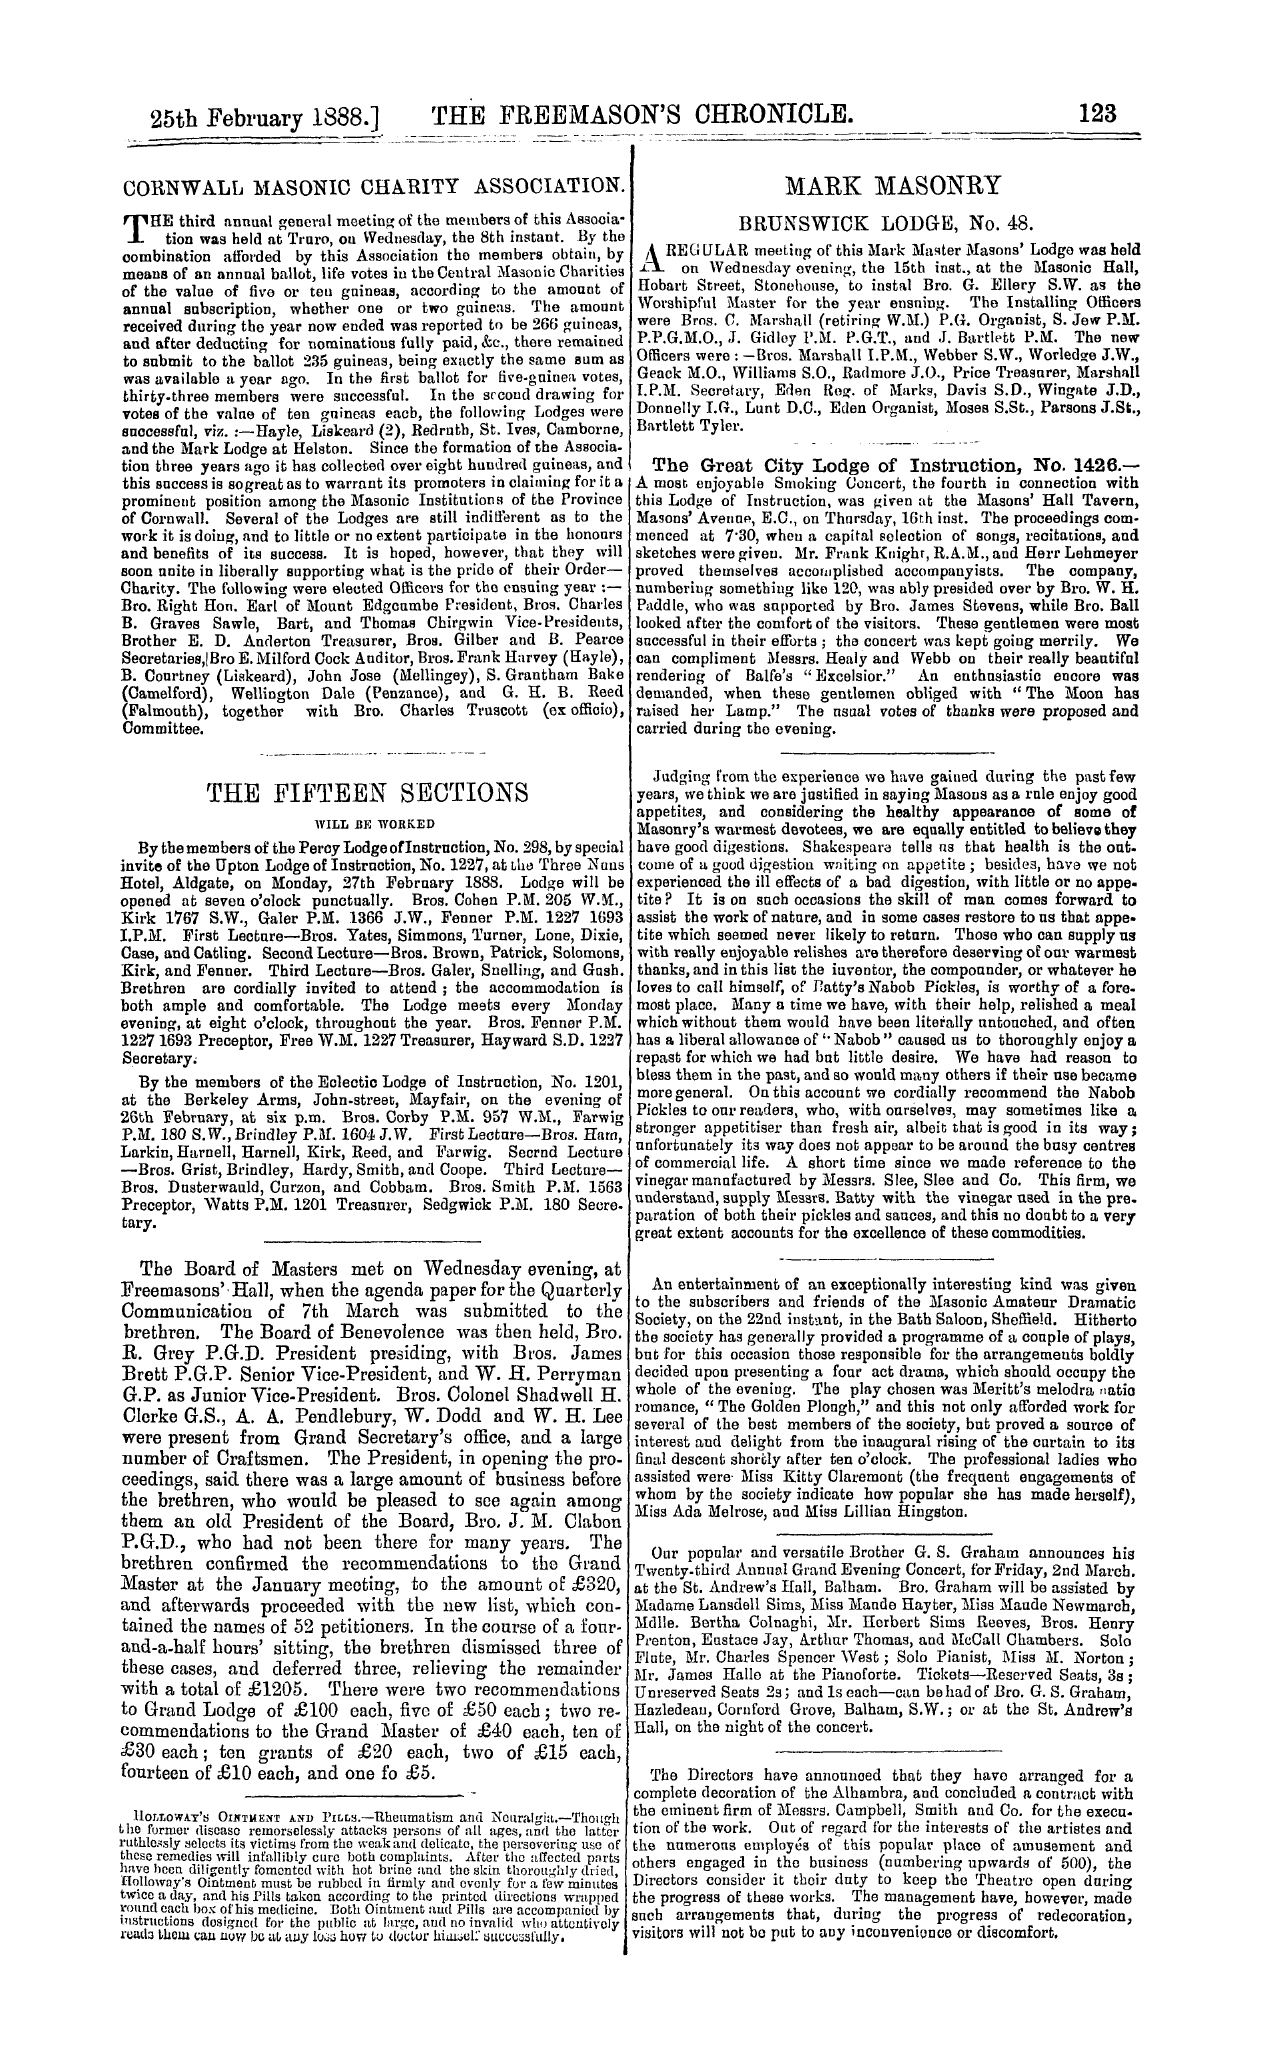 The Freemason's Chronicle: 1888-02-25: 11